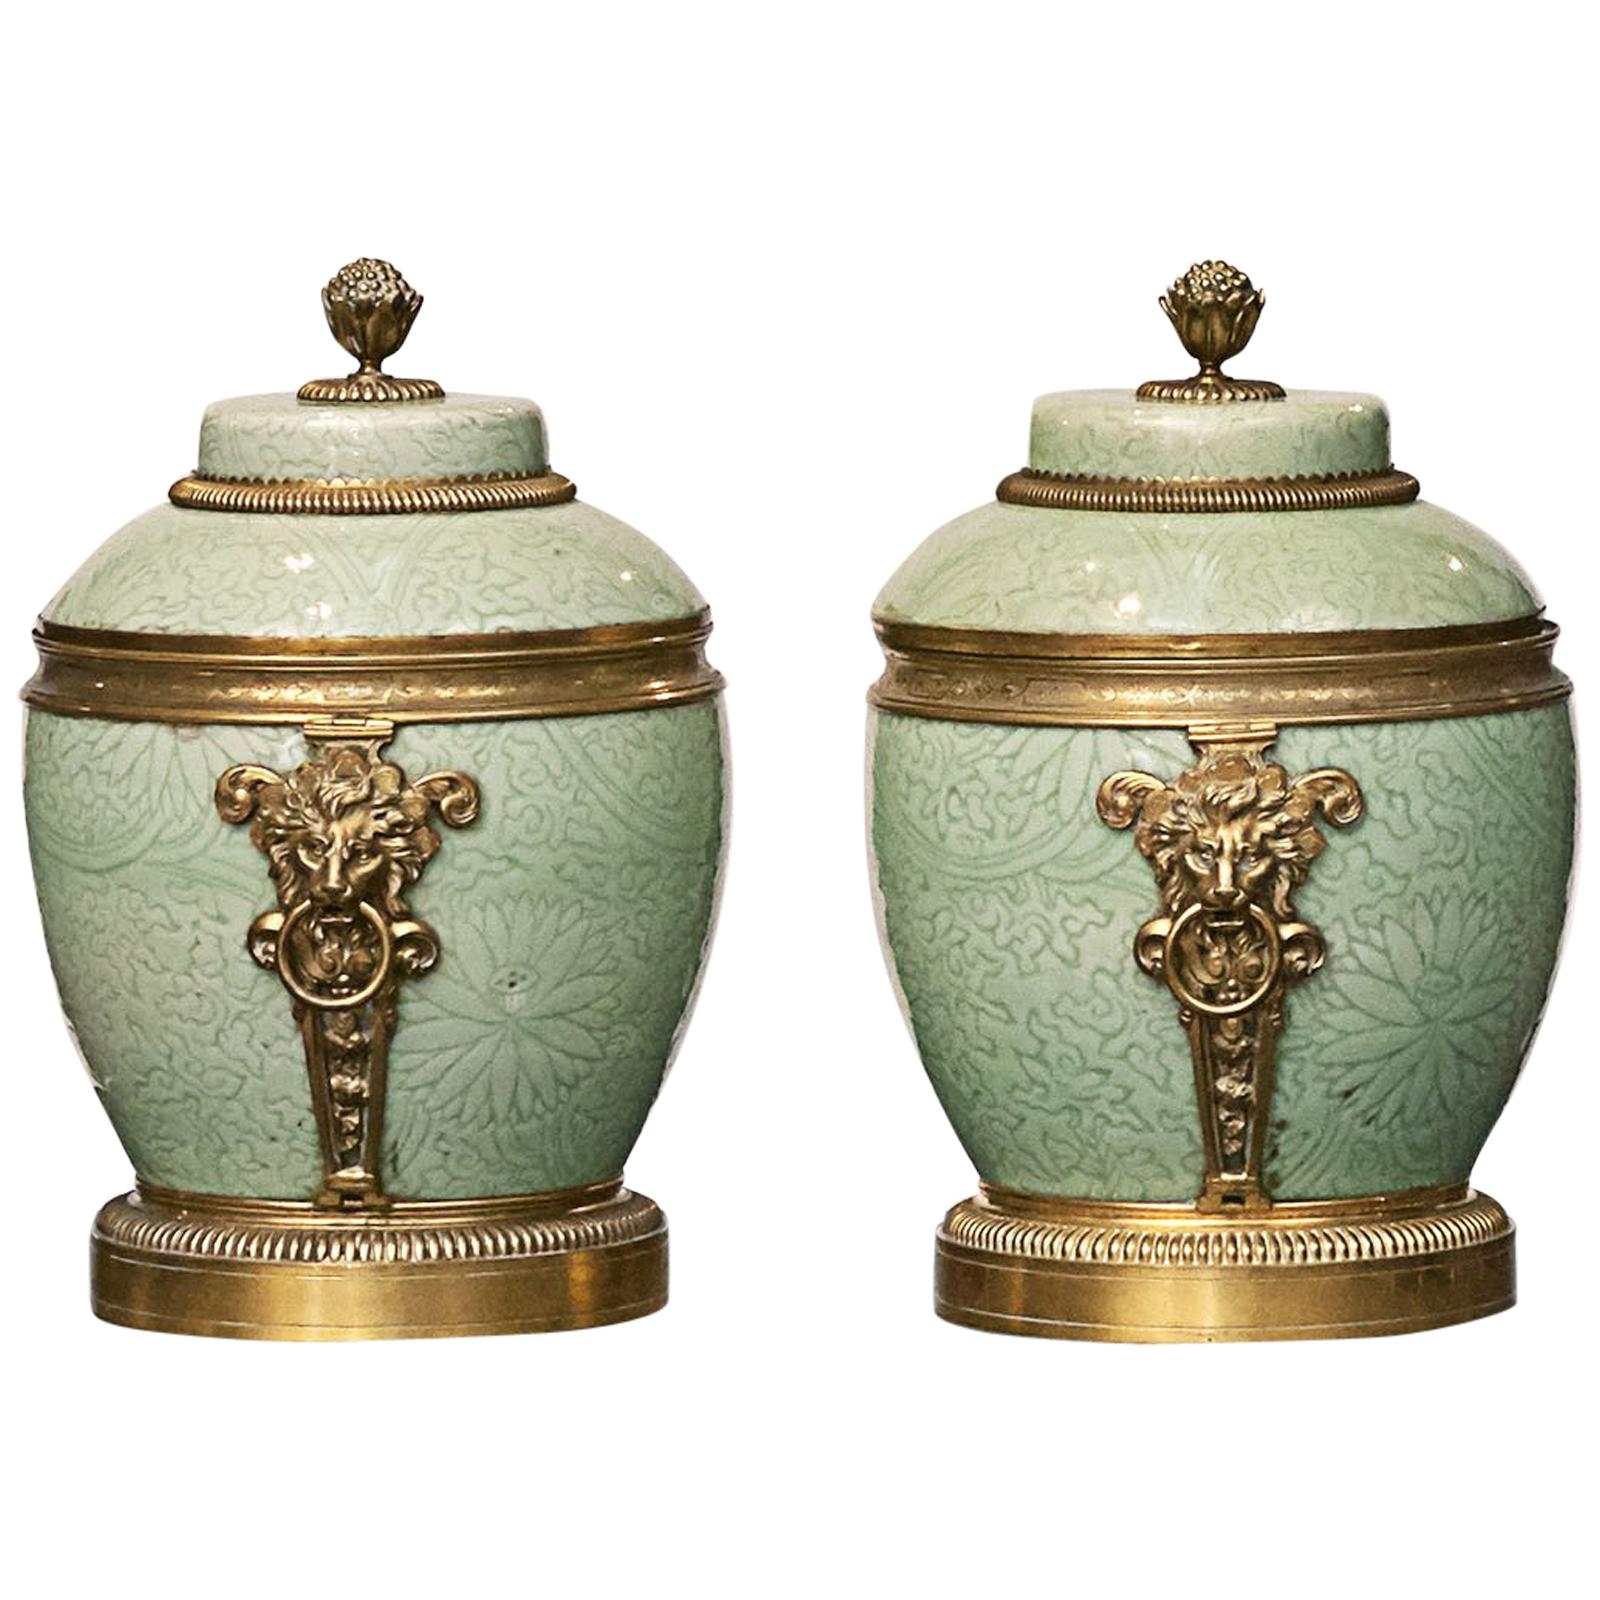 Pair of Regence Gilt-bronze Mounted Celadon Lided Vases